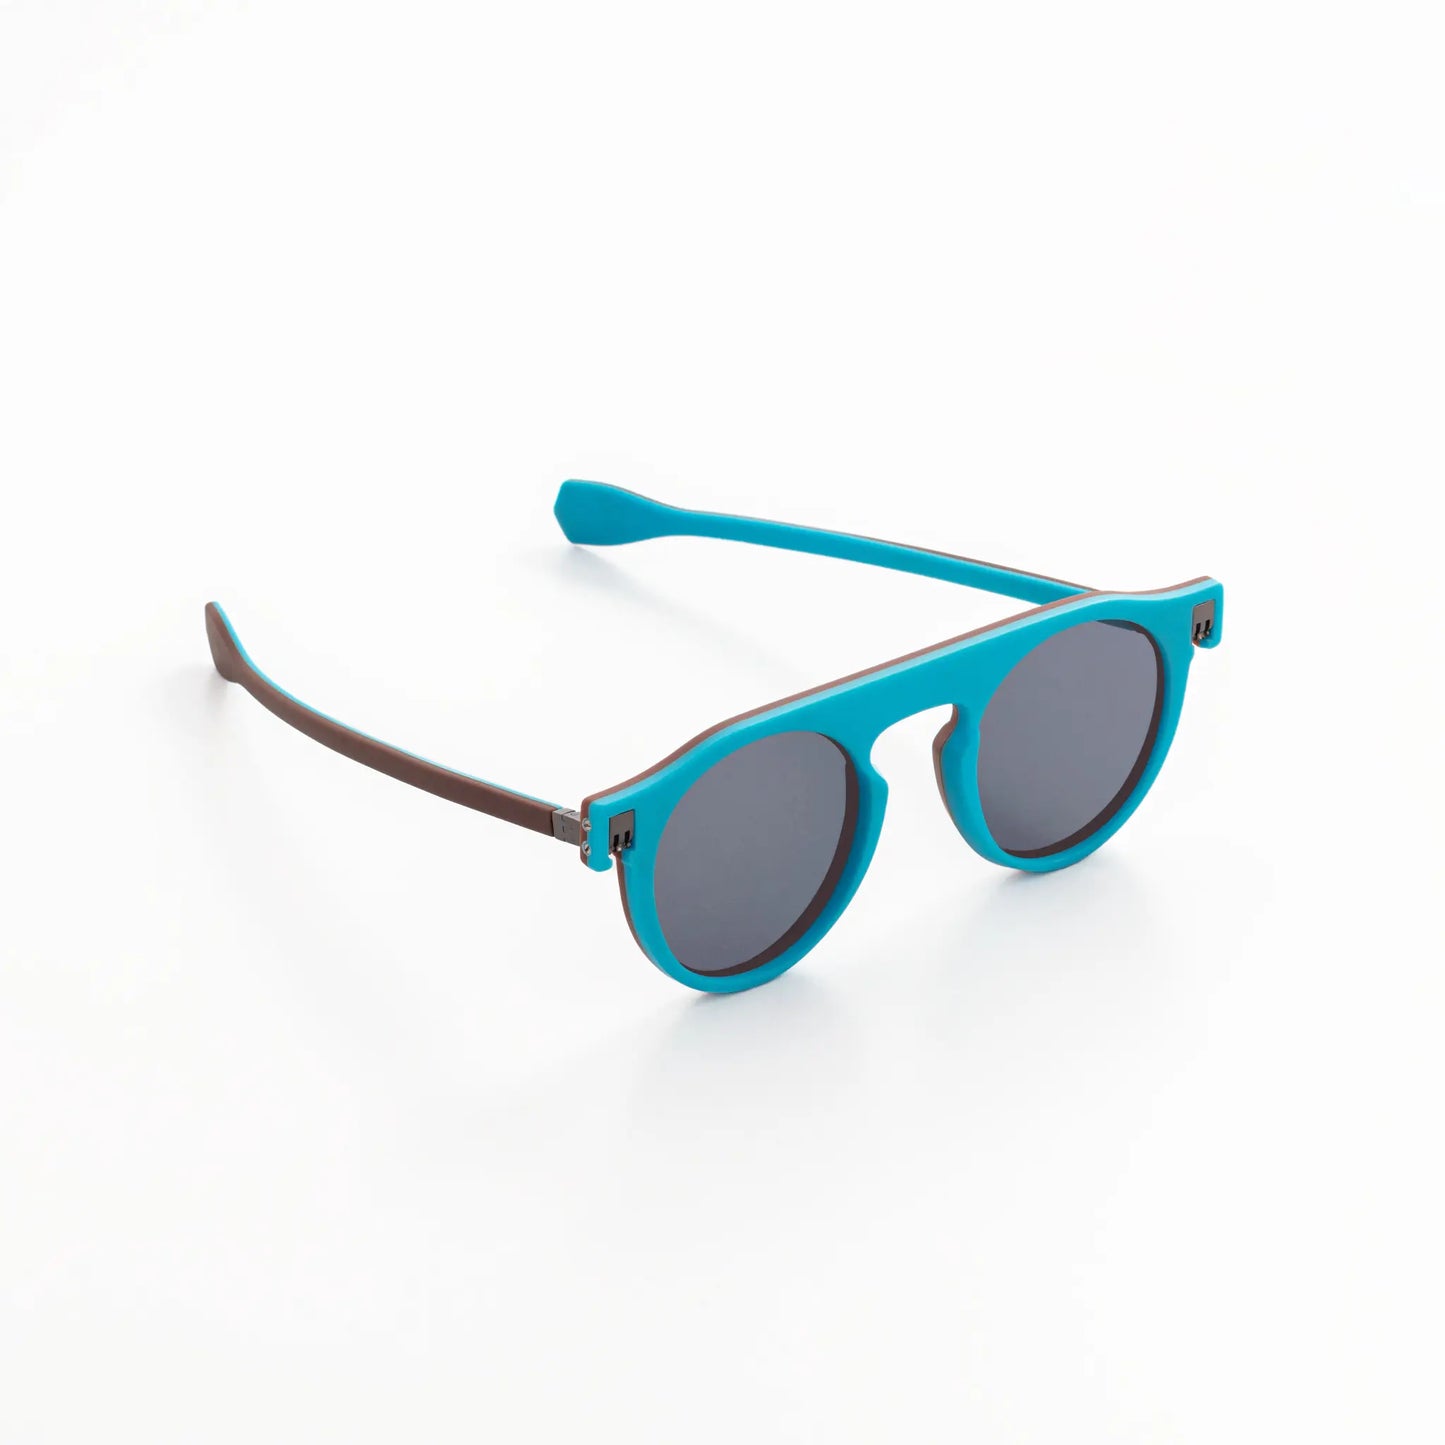 Reverso sunglasses brown & light blue reversible & ultra light side view 2